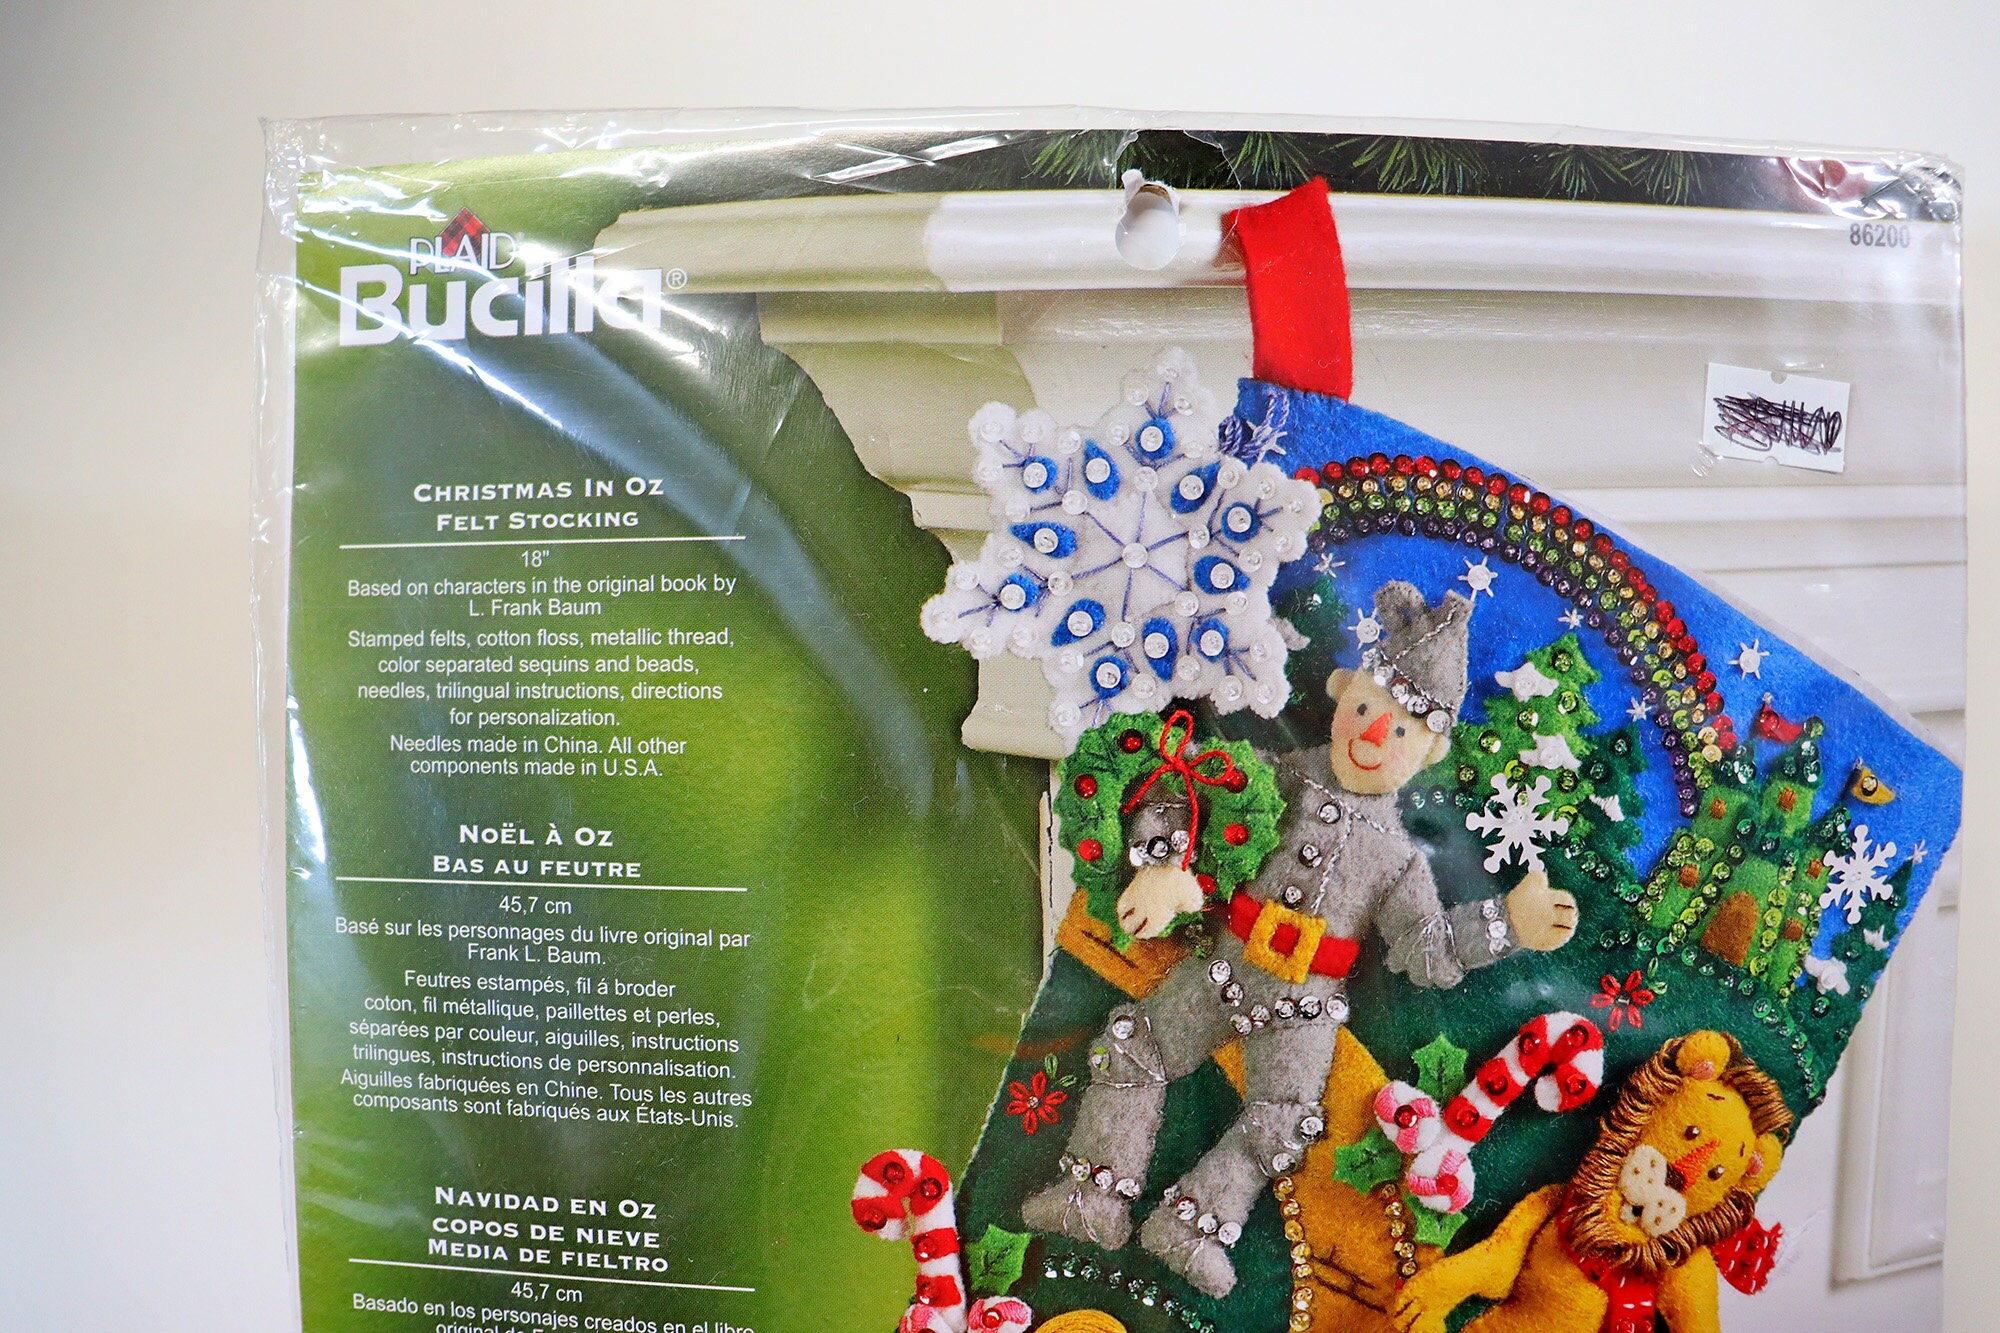 NEW Bucilla 2010 18 3D Felt Christmas In Oz Stocking Kit 86200